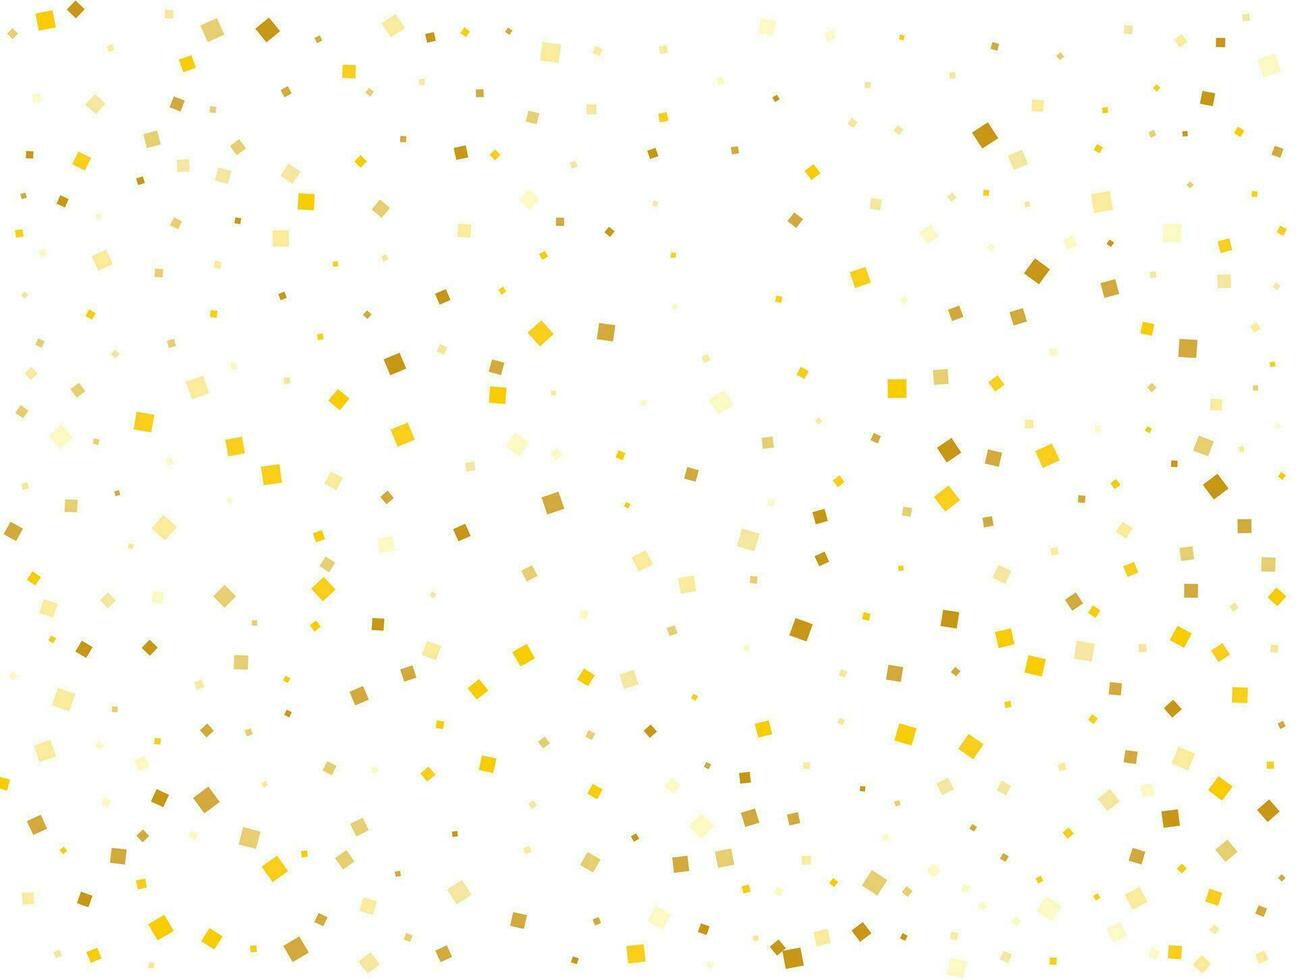 Gender Neutral Gold Square Confetti. Vector illustration